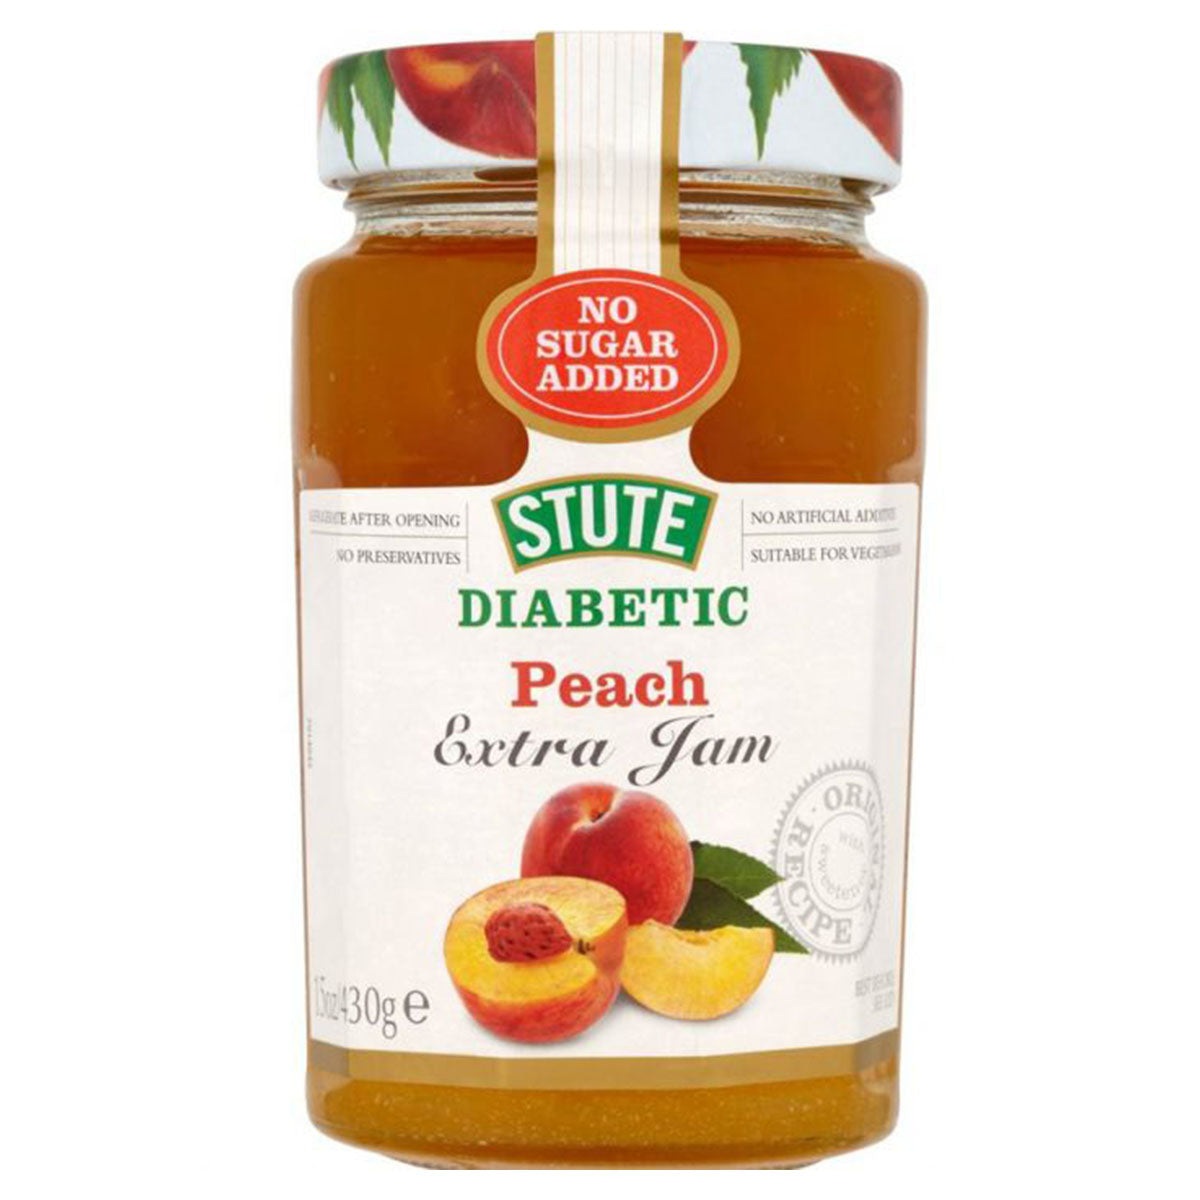 Stute - Diabetic Peach Extra Jam - 430g - Continental Food Store